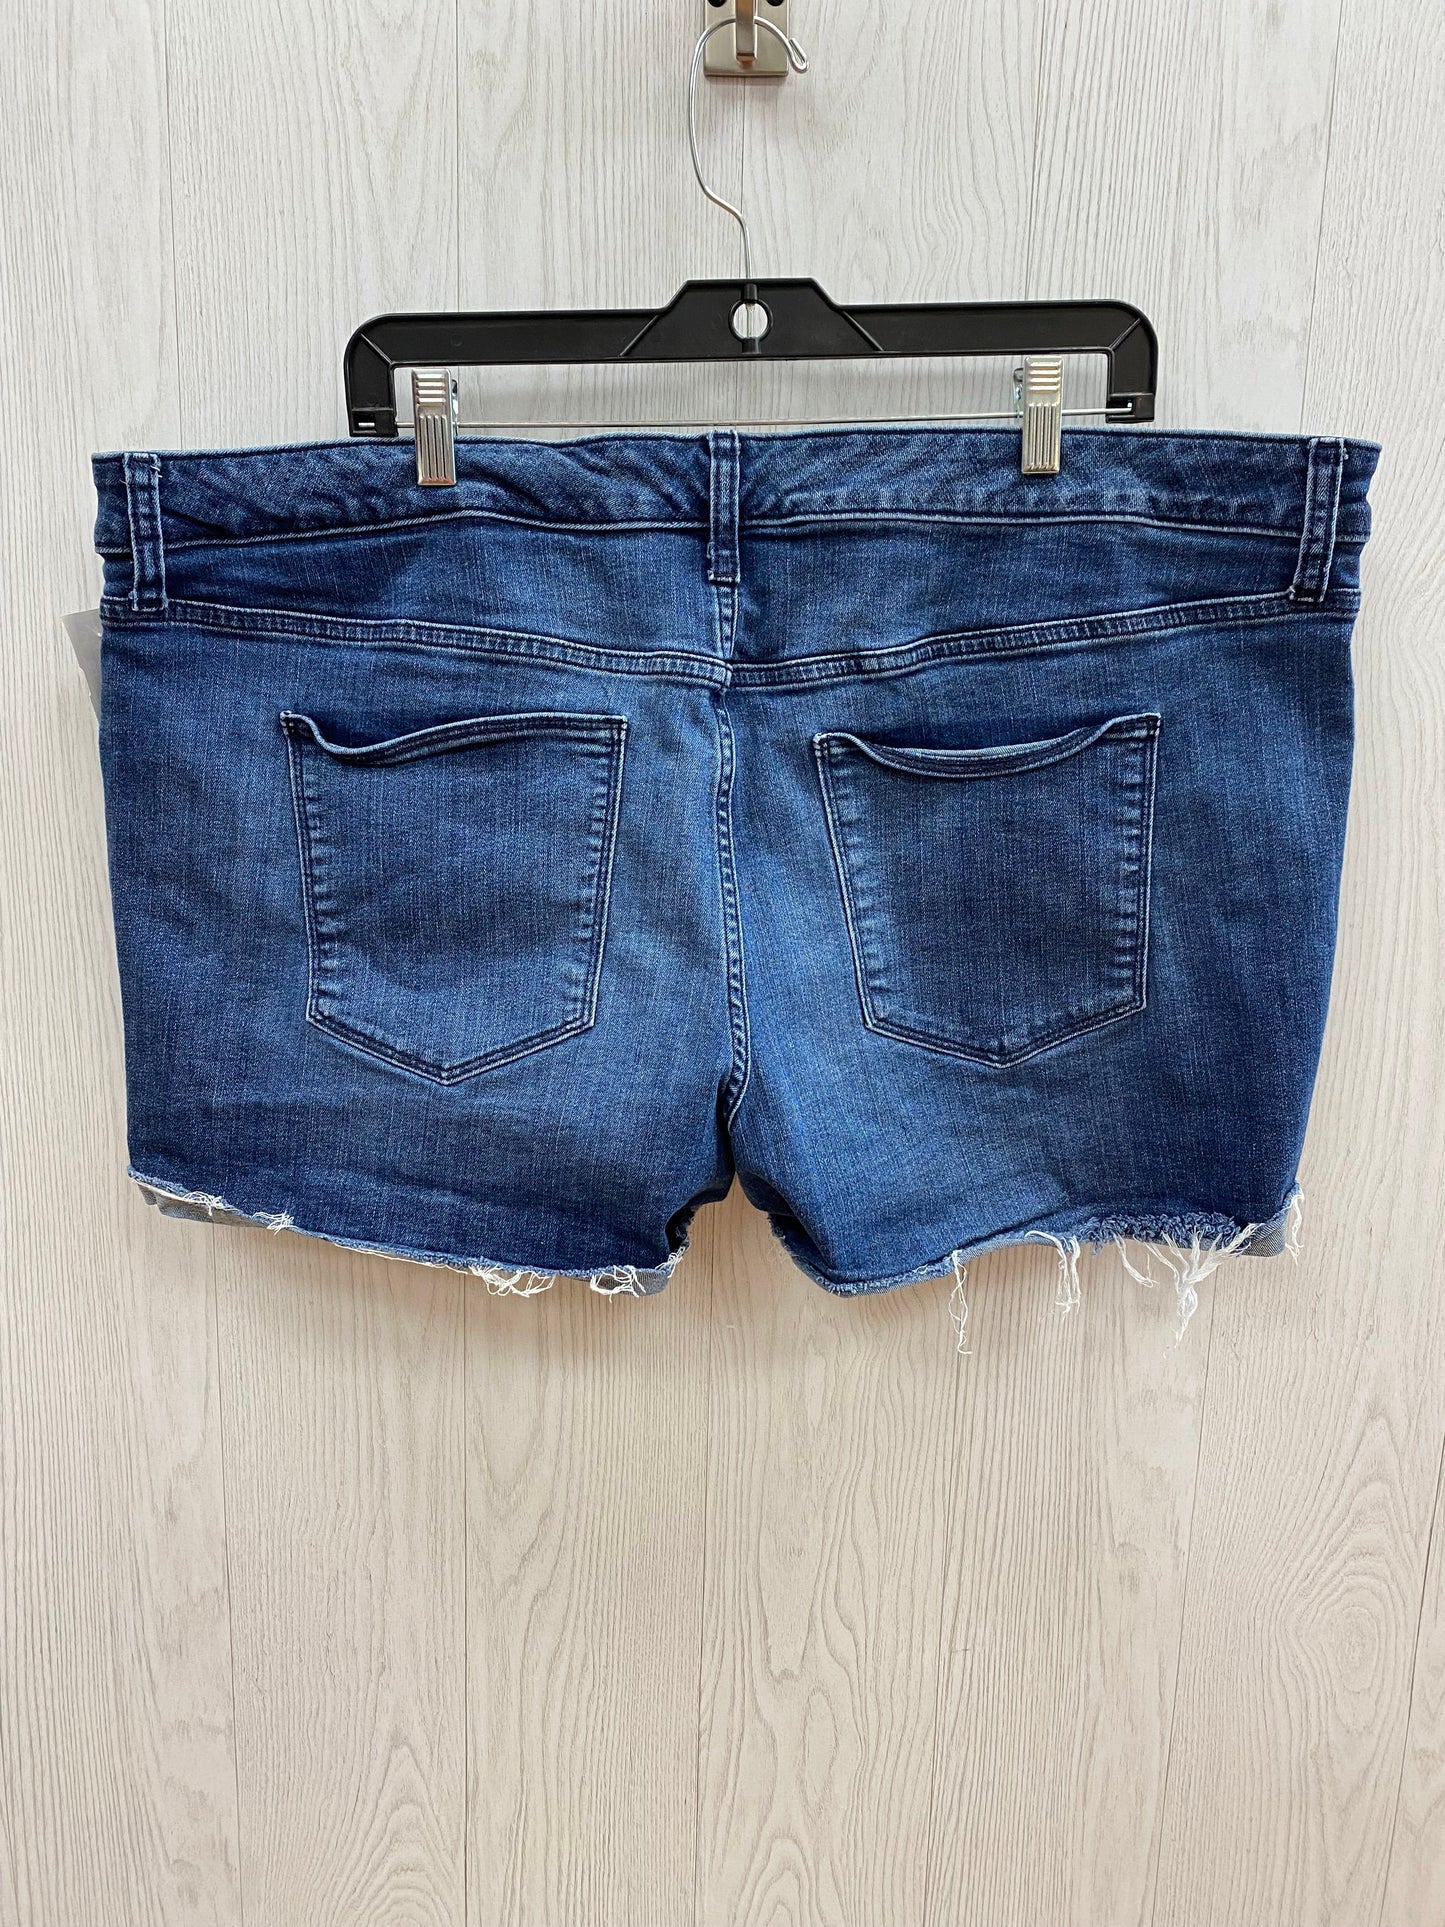 Blue Denim Shorts Universal Thread, Size 22w